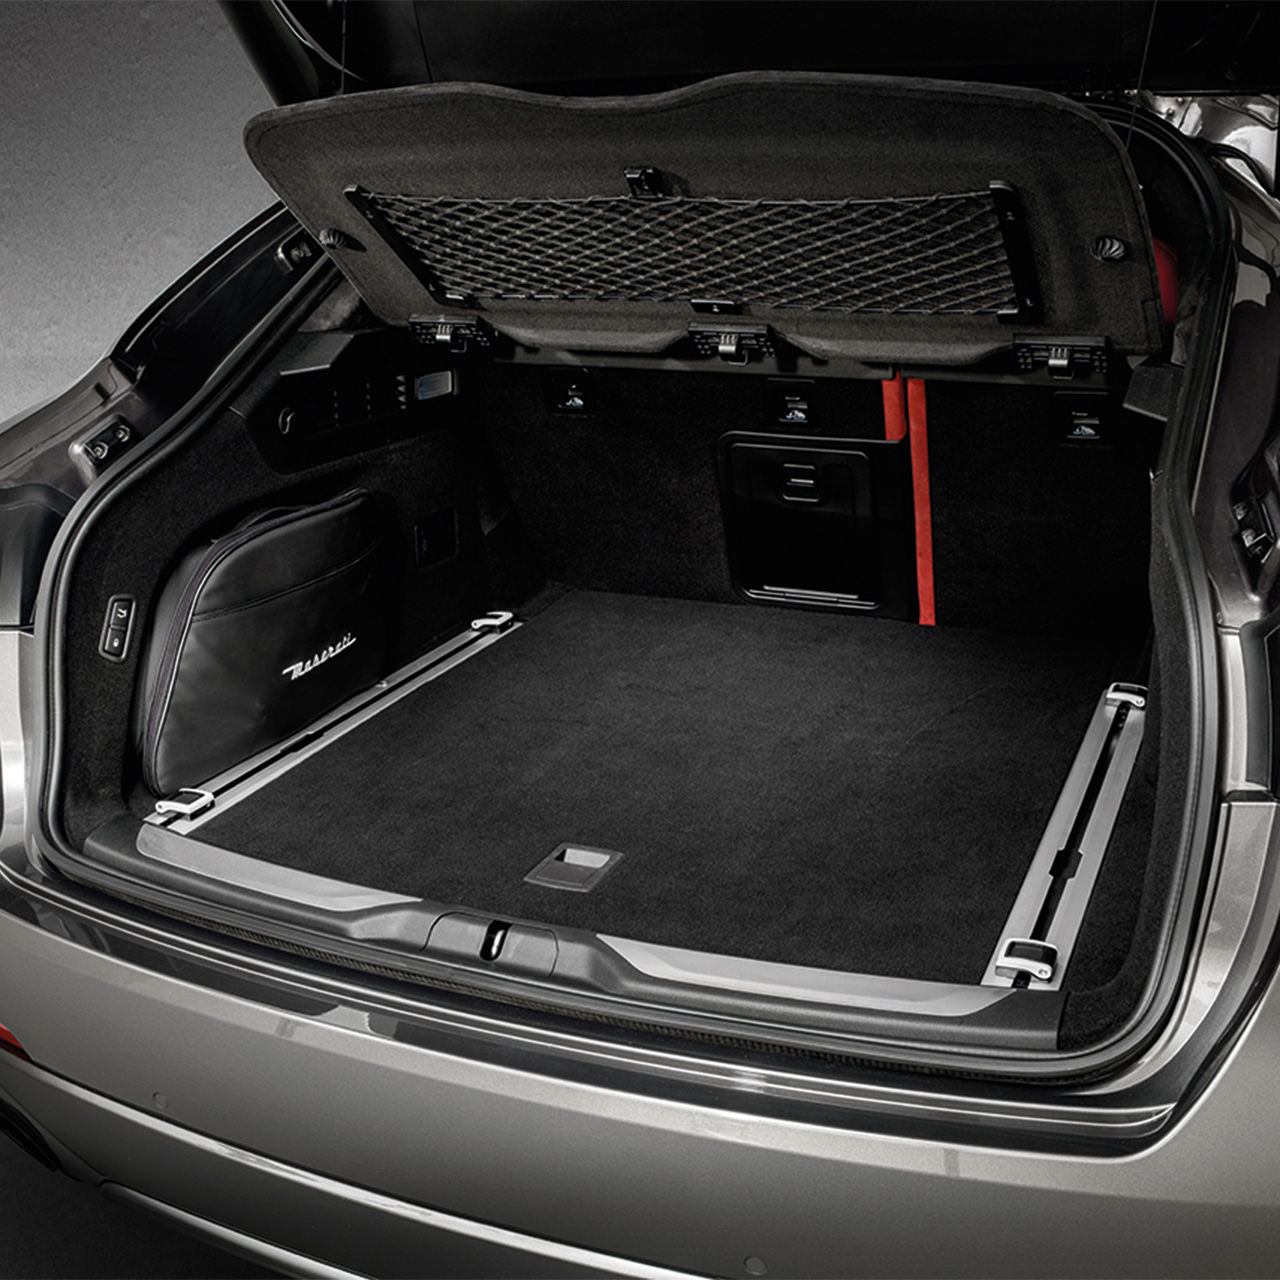 Tracks inside the trunk of Maserati Levante